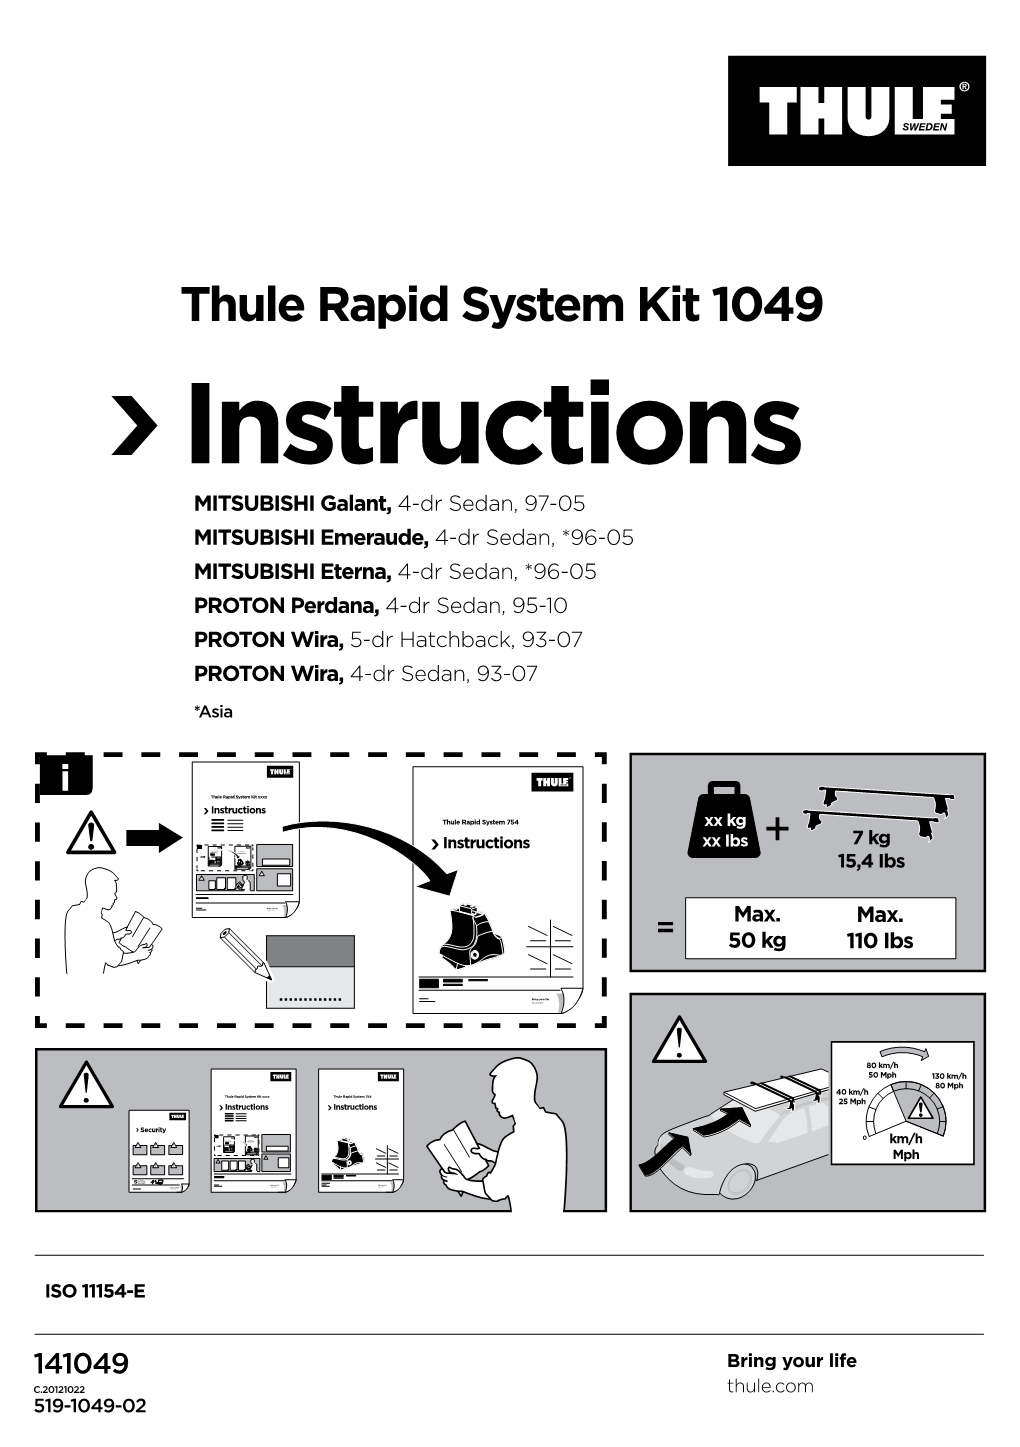 Thule Rapid System Kit 1049